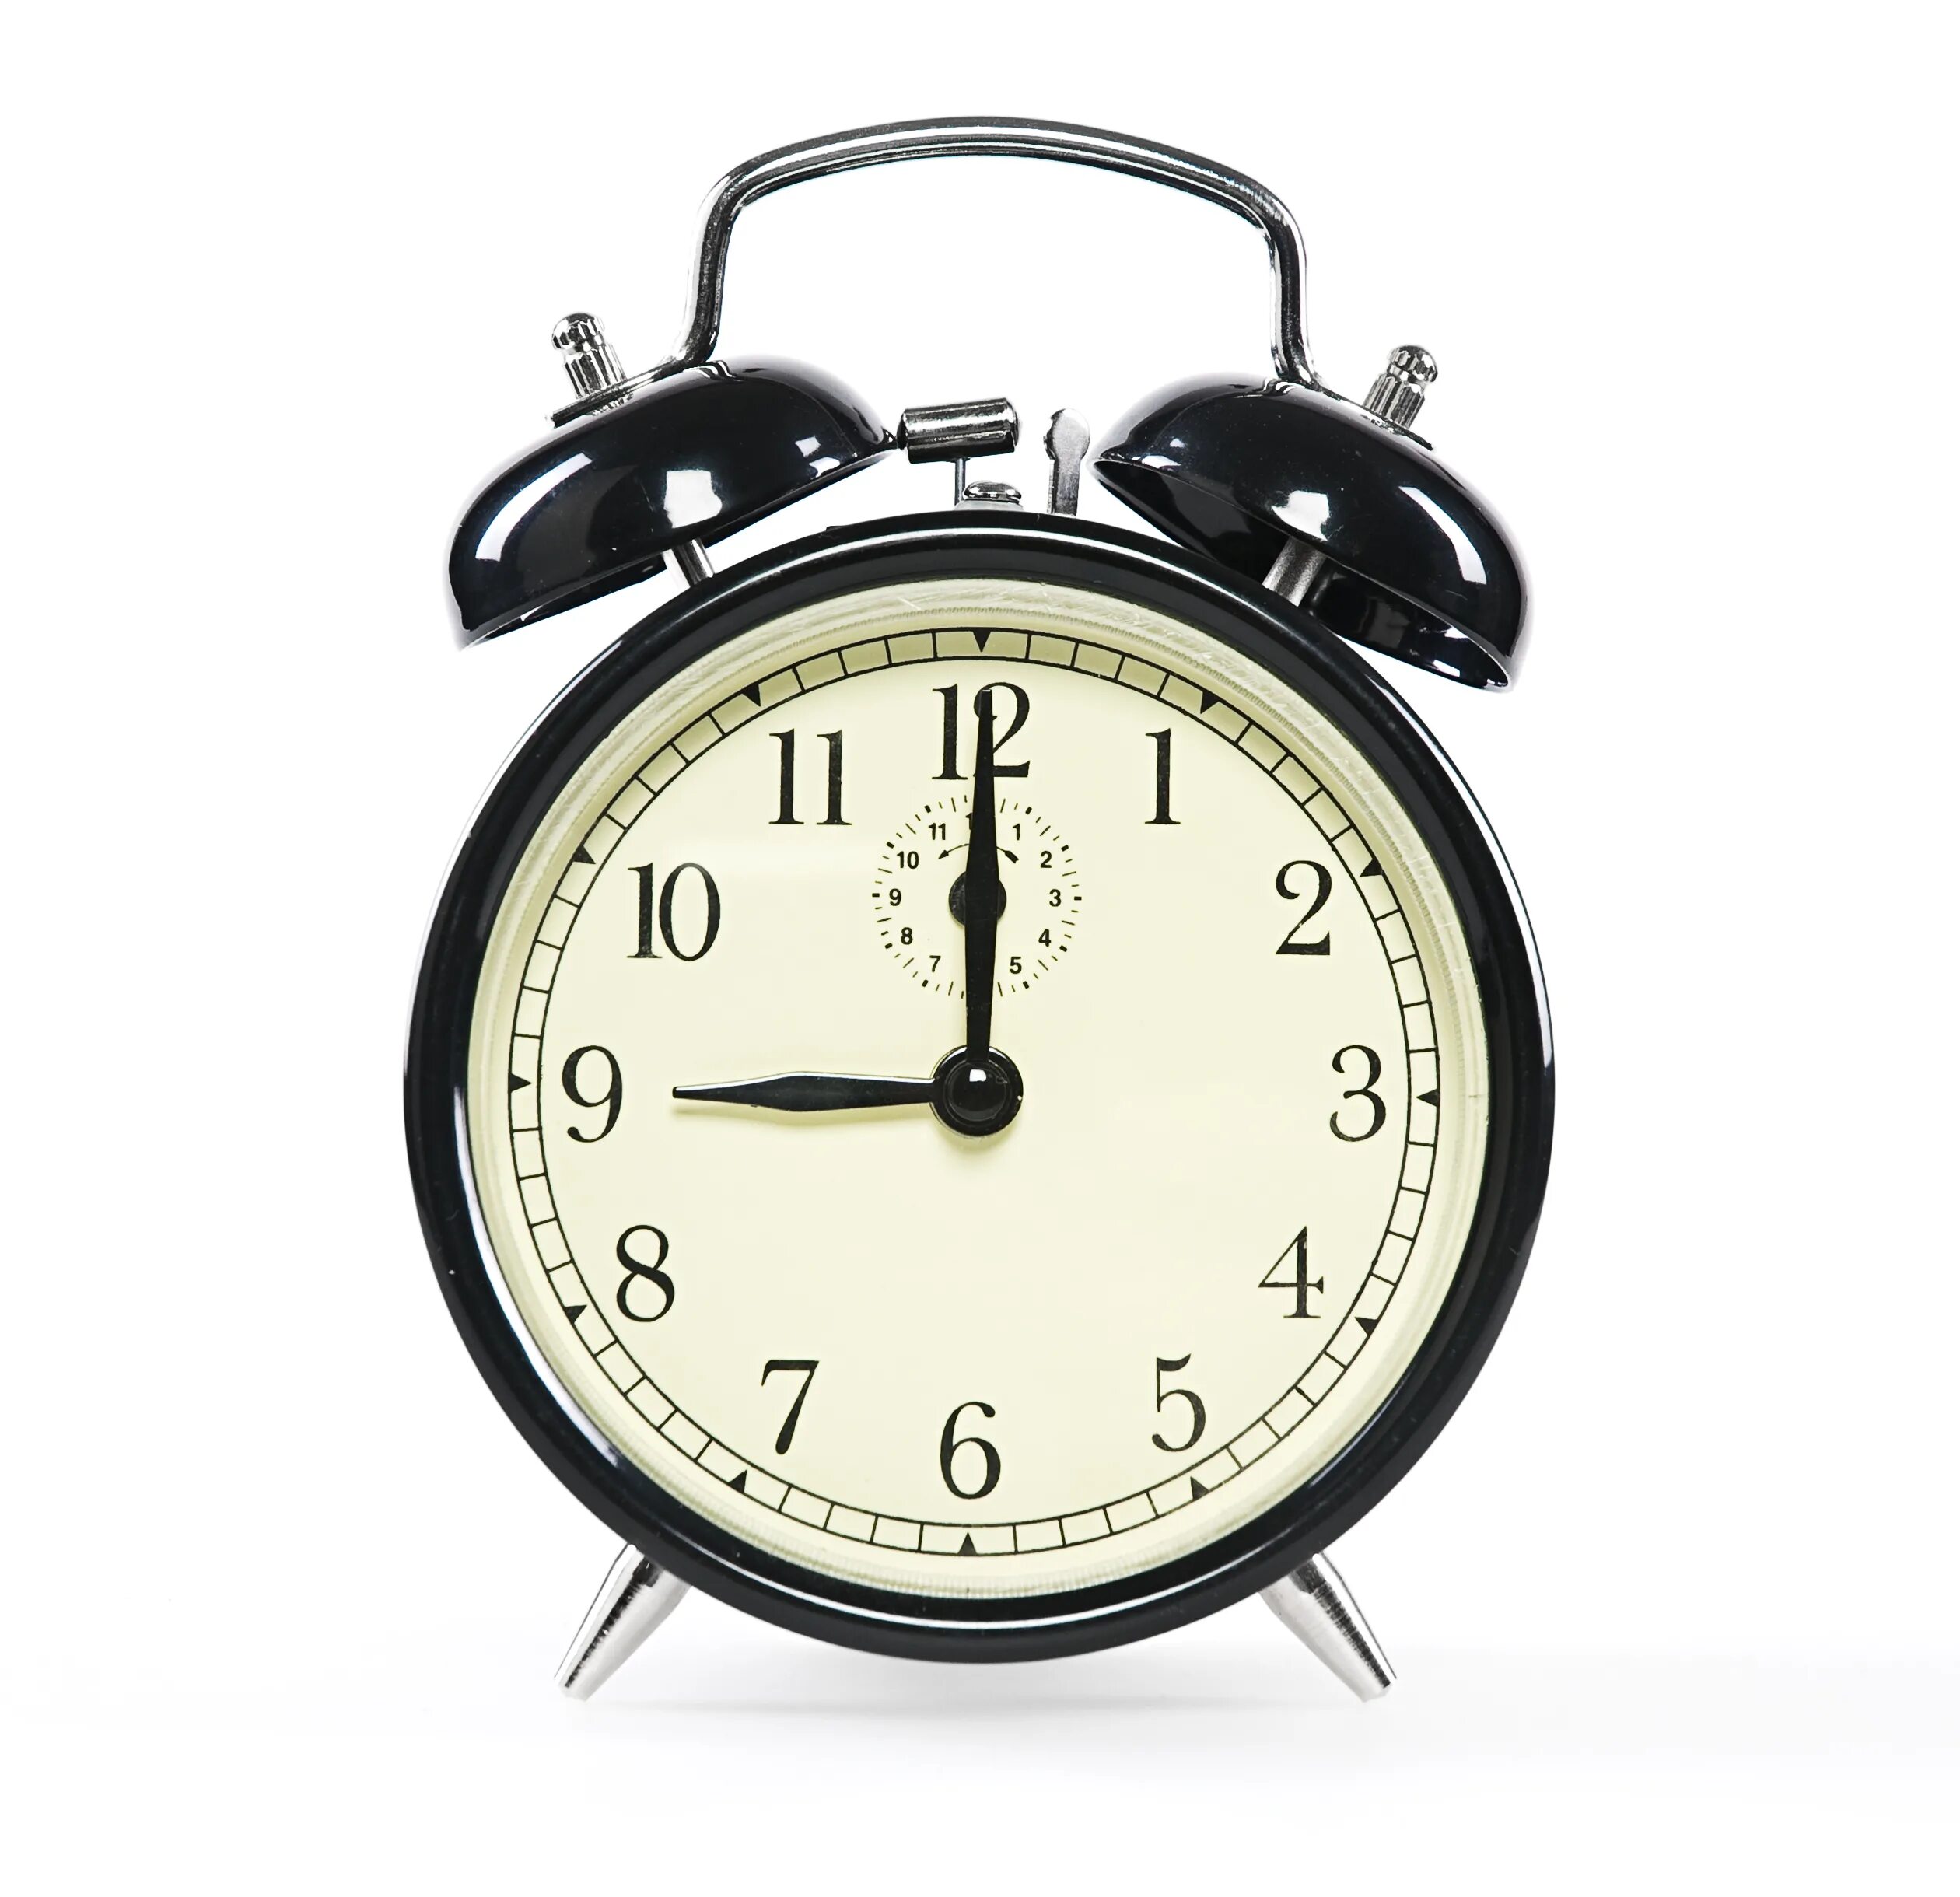 Картинки 1 час. Часы будильник. Часы 13 00. Часы 1 час. Изображение будильника.